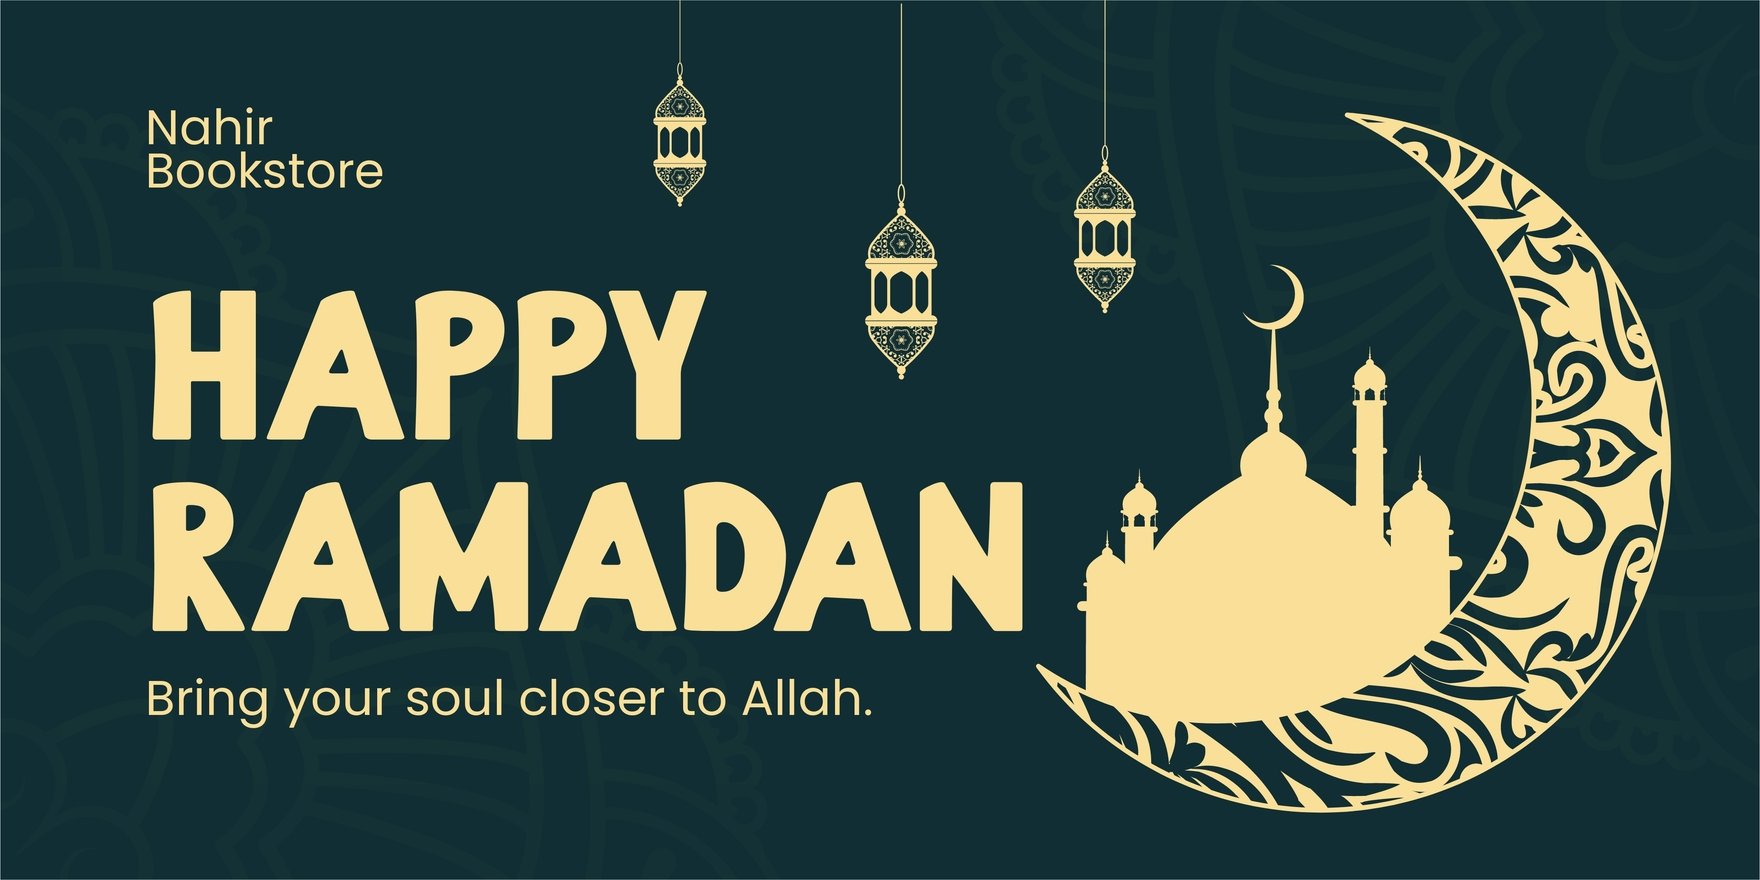 Ramadan Banner Template